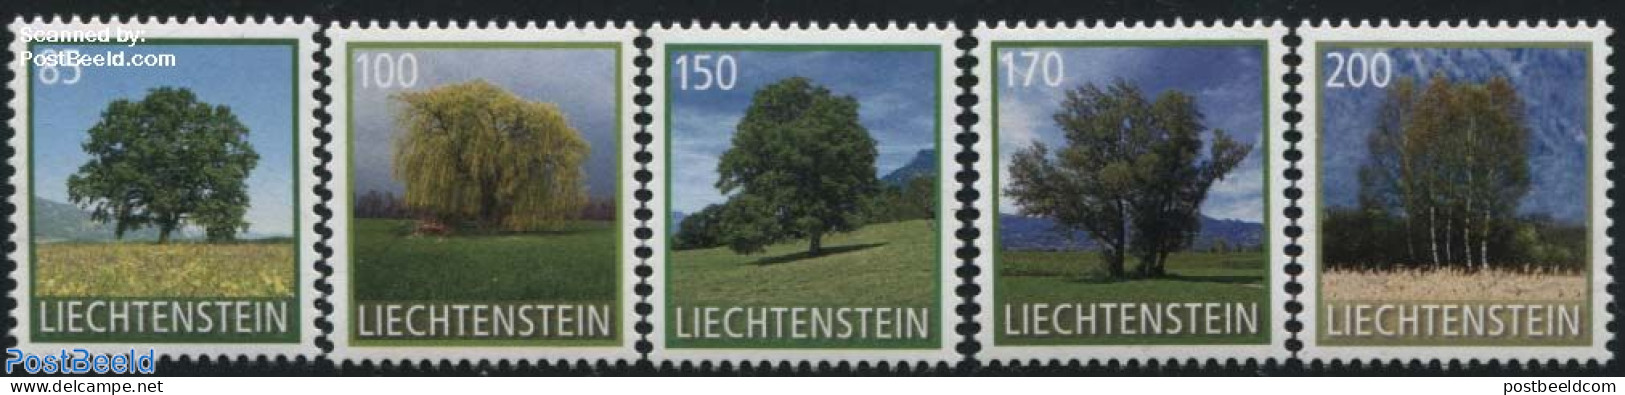 Liechtenstein 2016 Definitives, Trees 5v S-a, Mint NH, Nature - Trees & Forests - Neufs